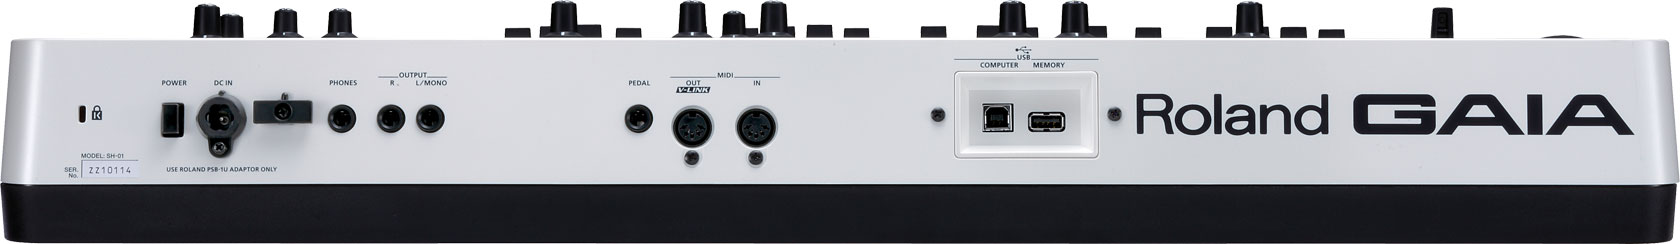 Roland sh- 201 virtual analog synthesizer system